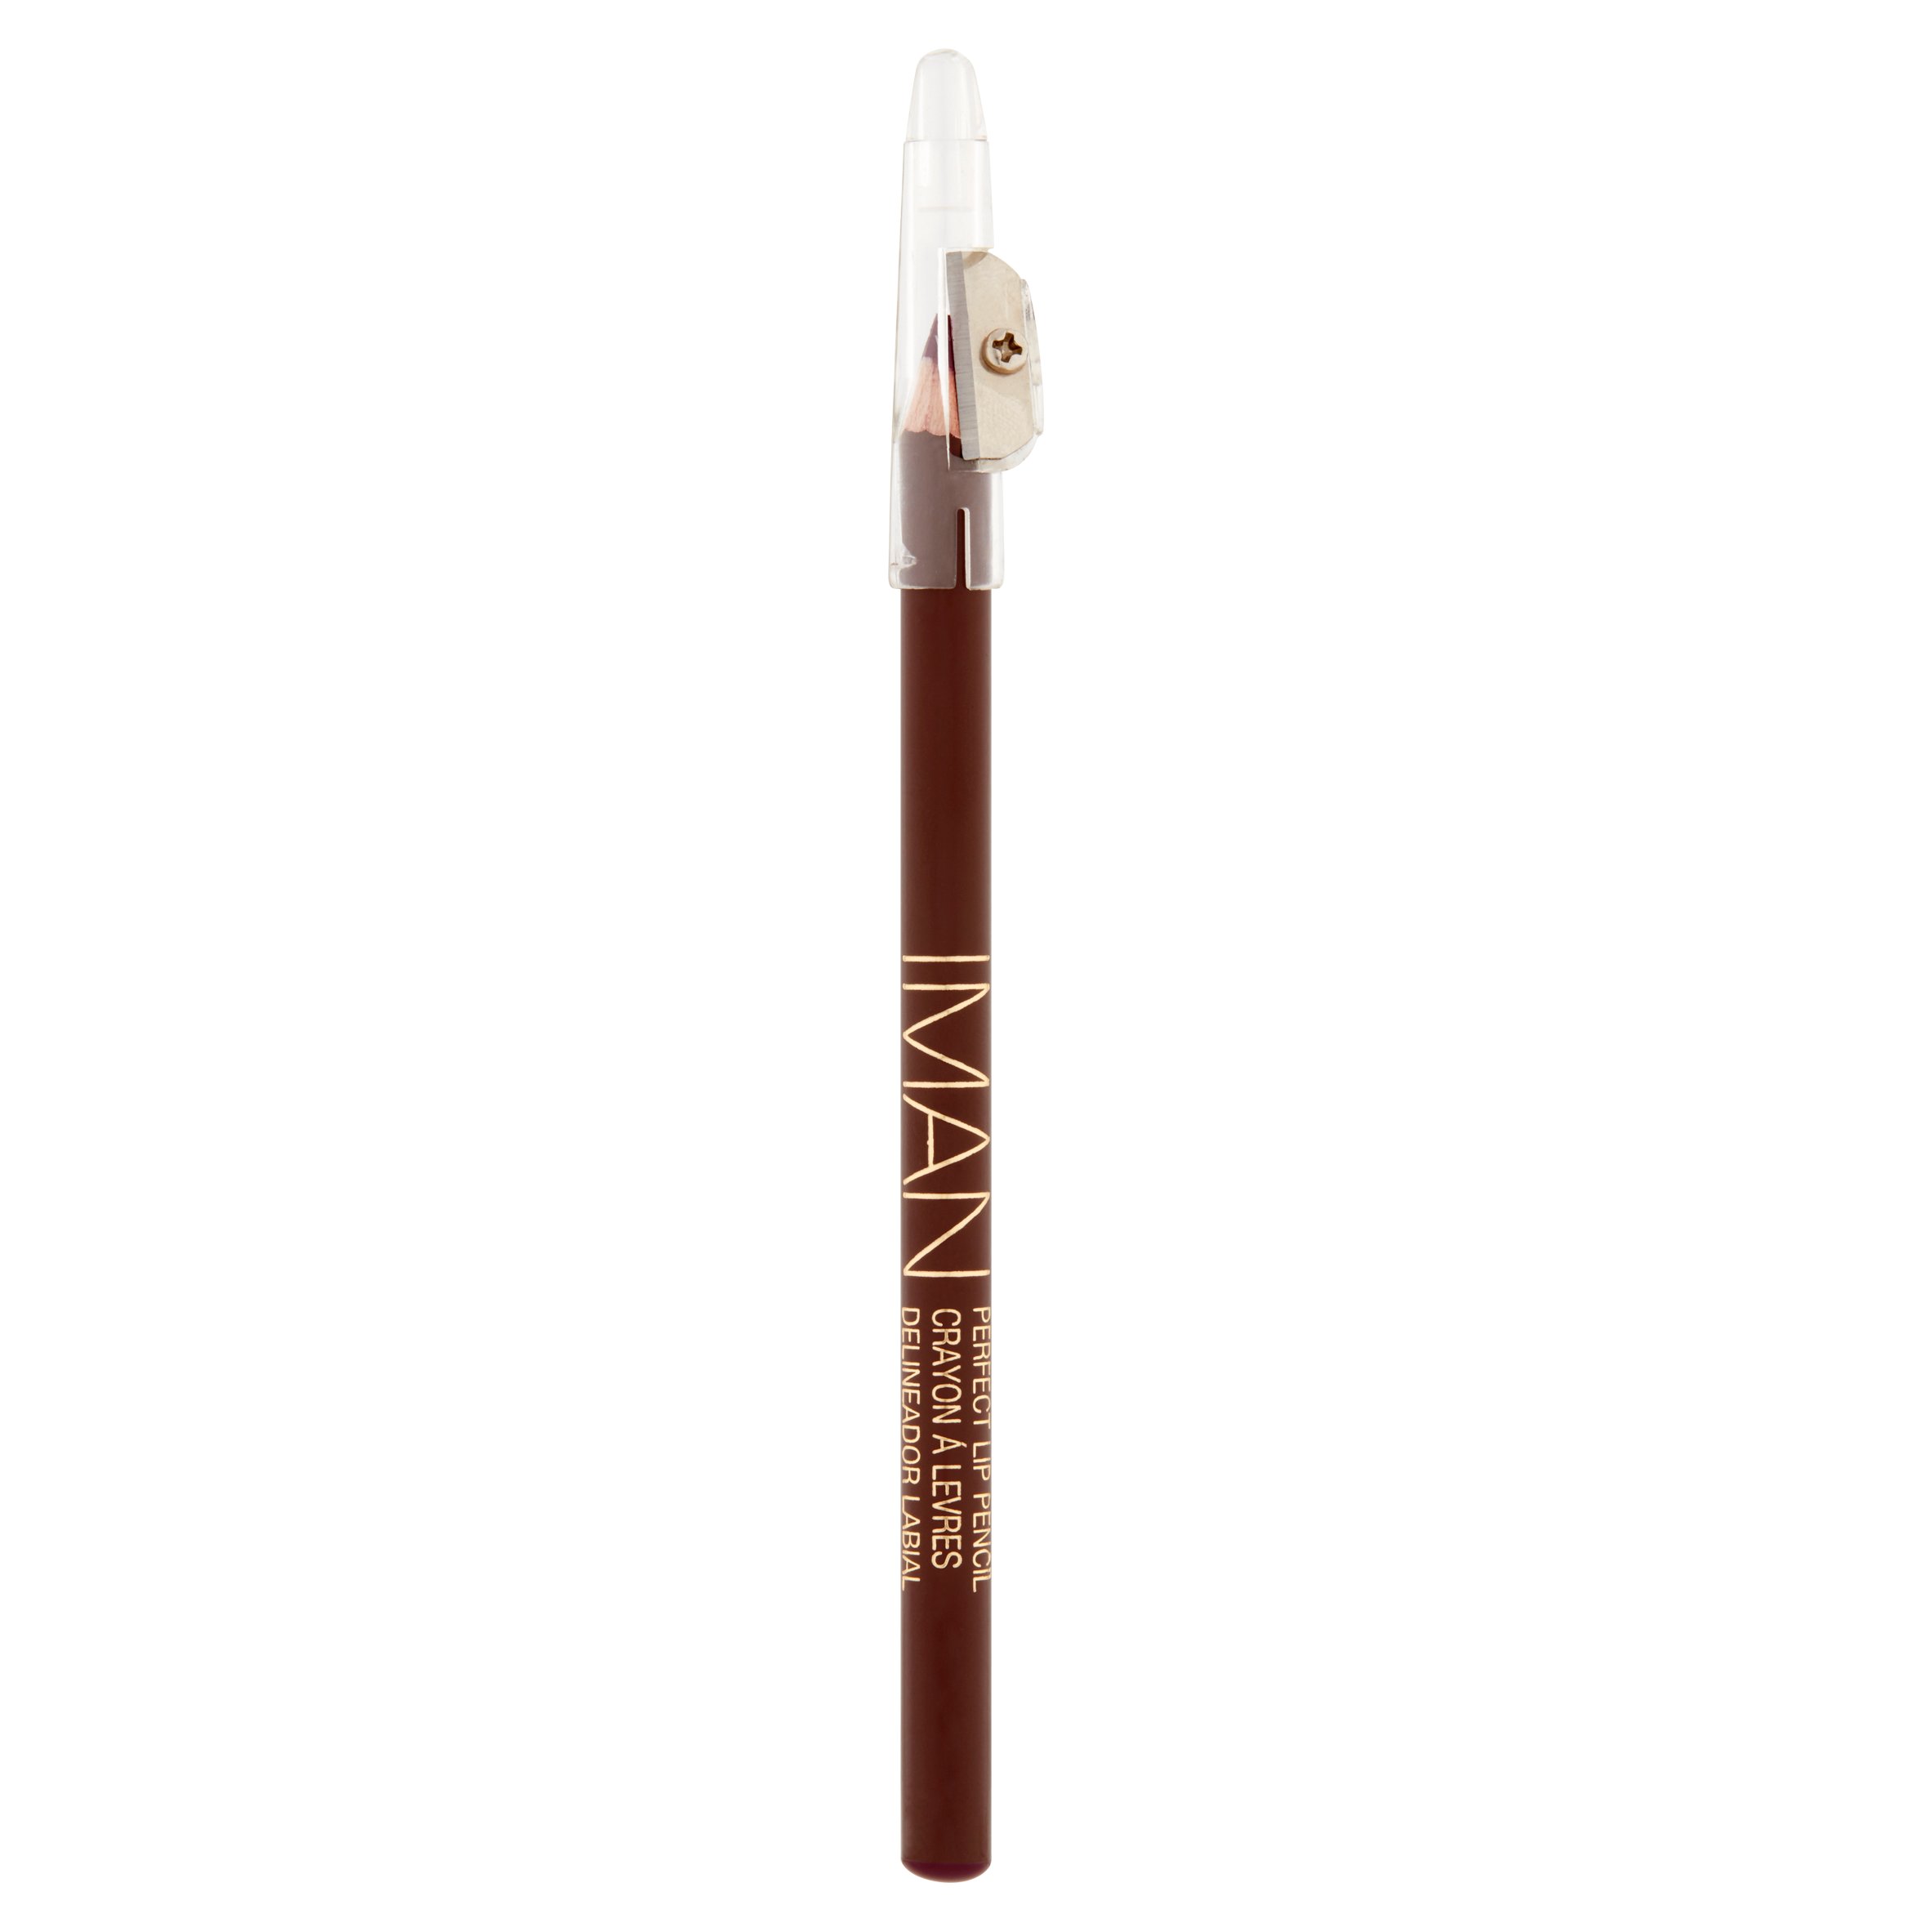 IMAN Perfect Lip Pencil, Midnight - image 1 of 4